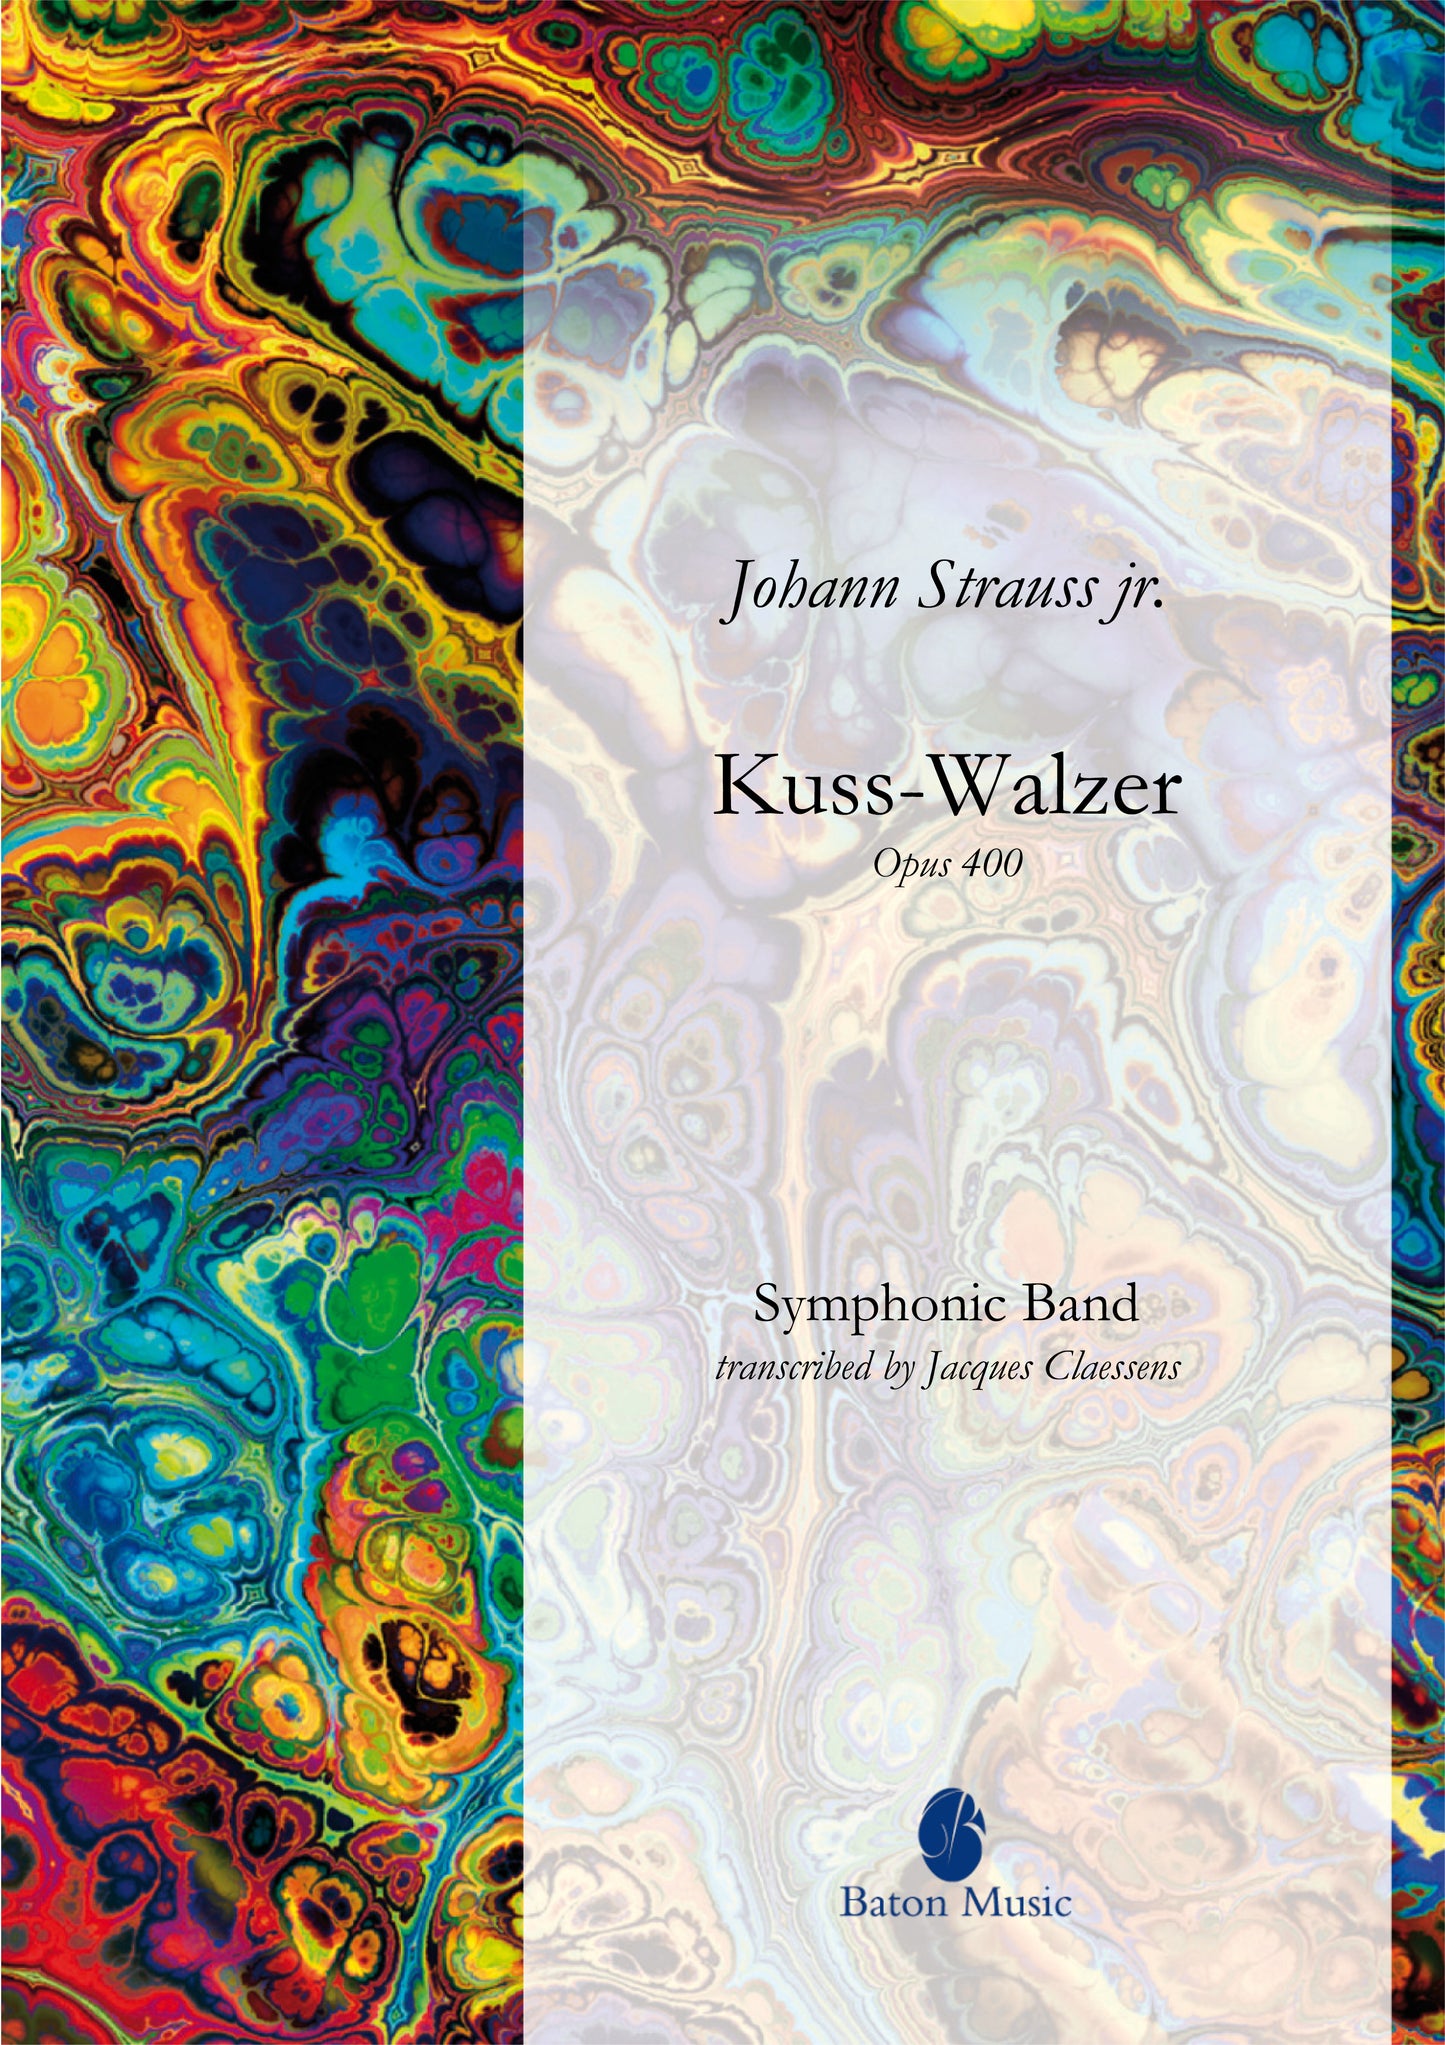 Kuss-Walzer (Waltz) - Johann Strauss